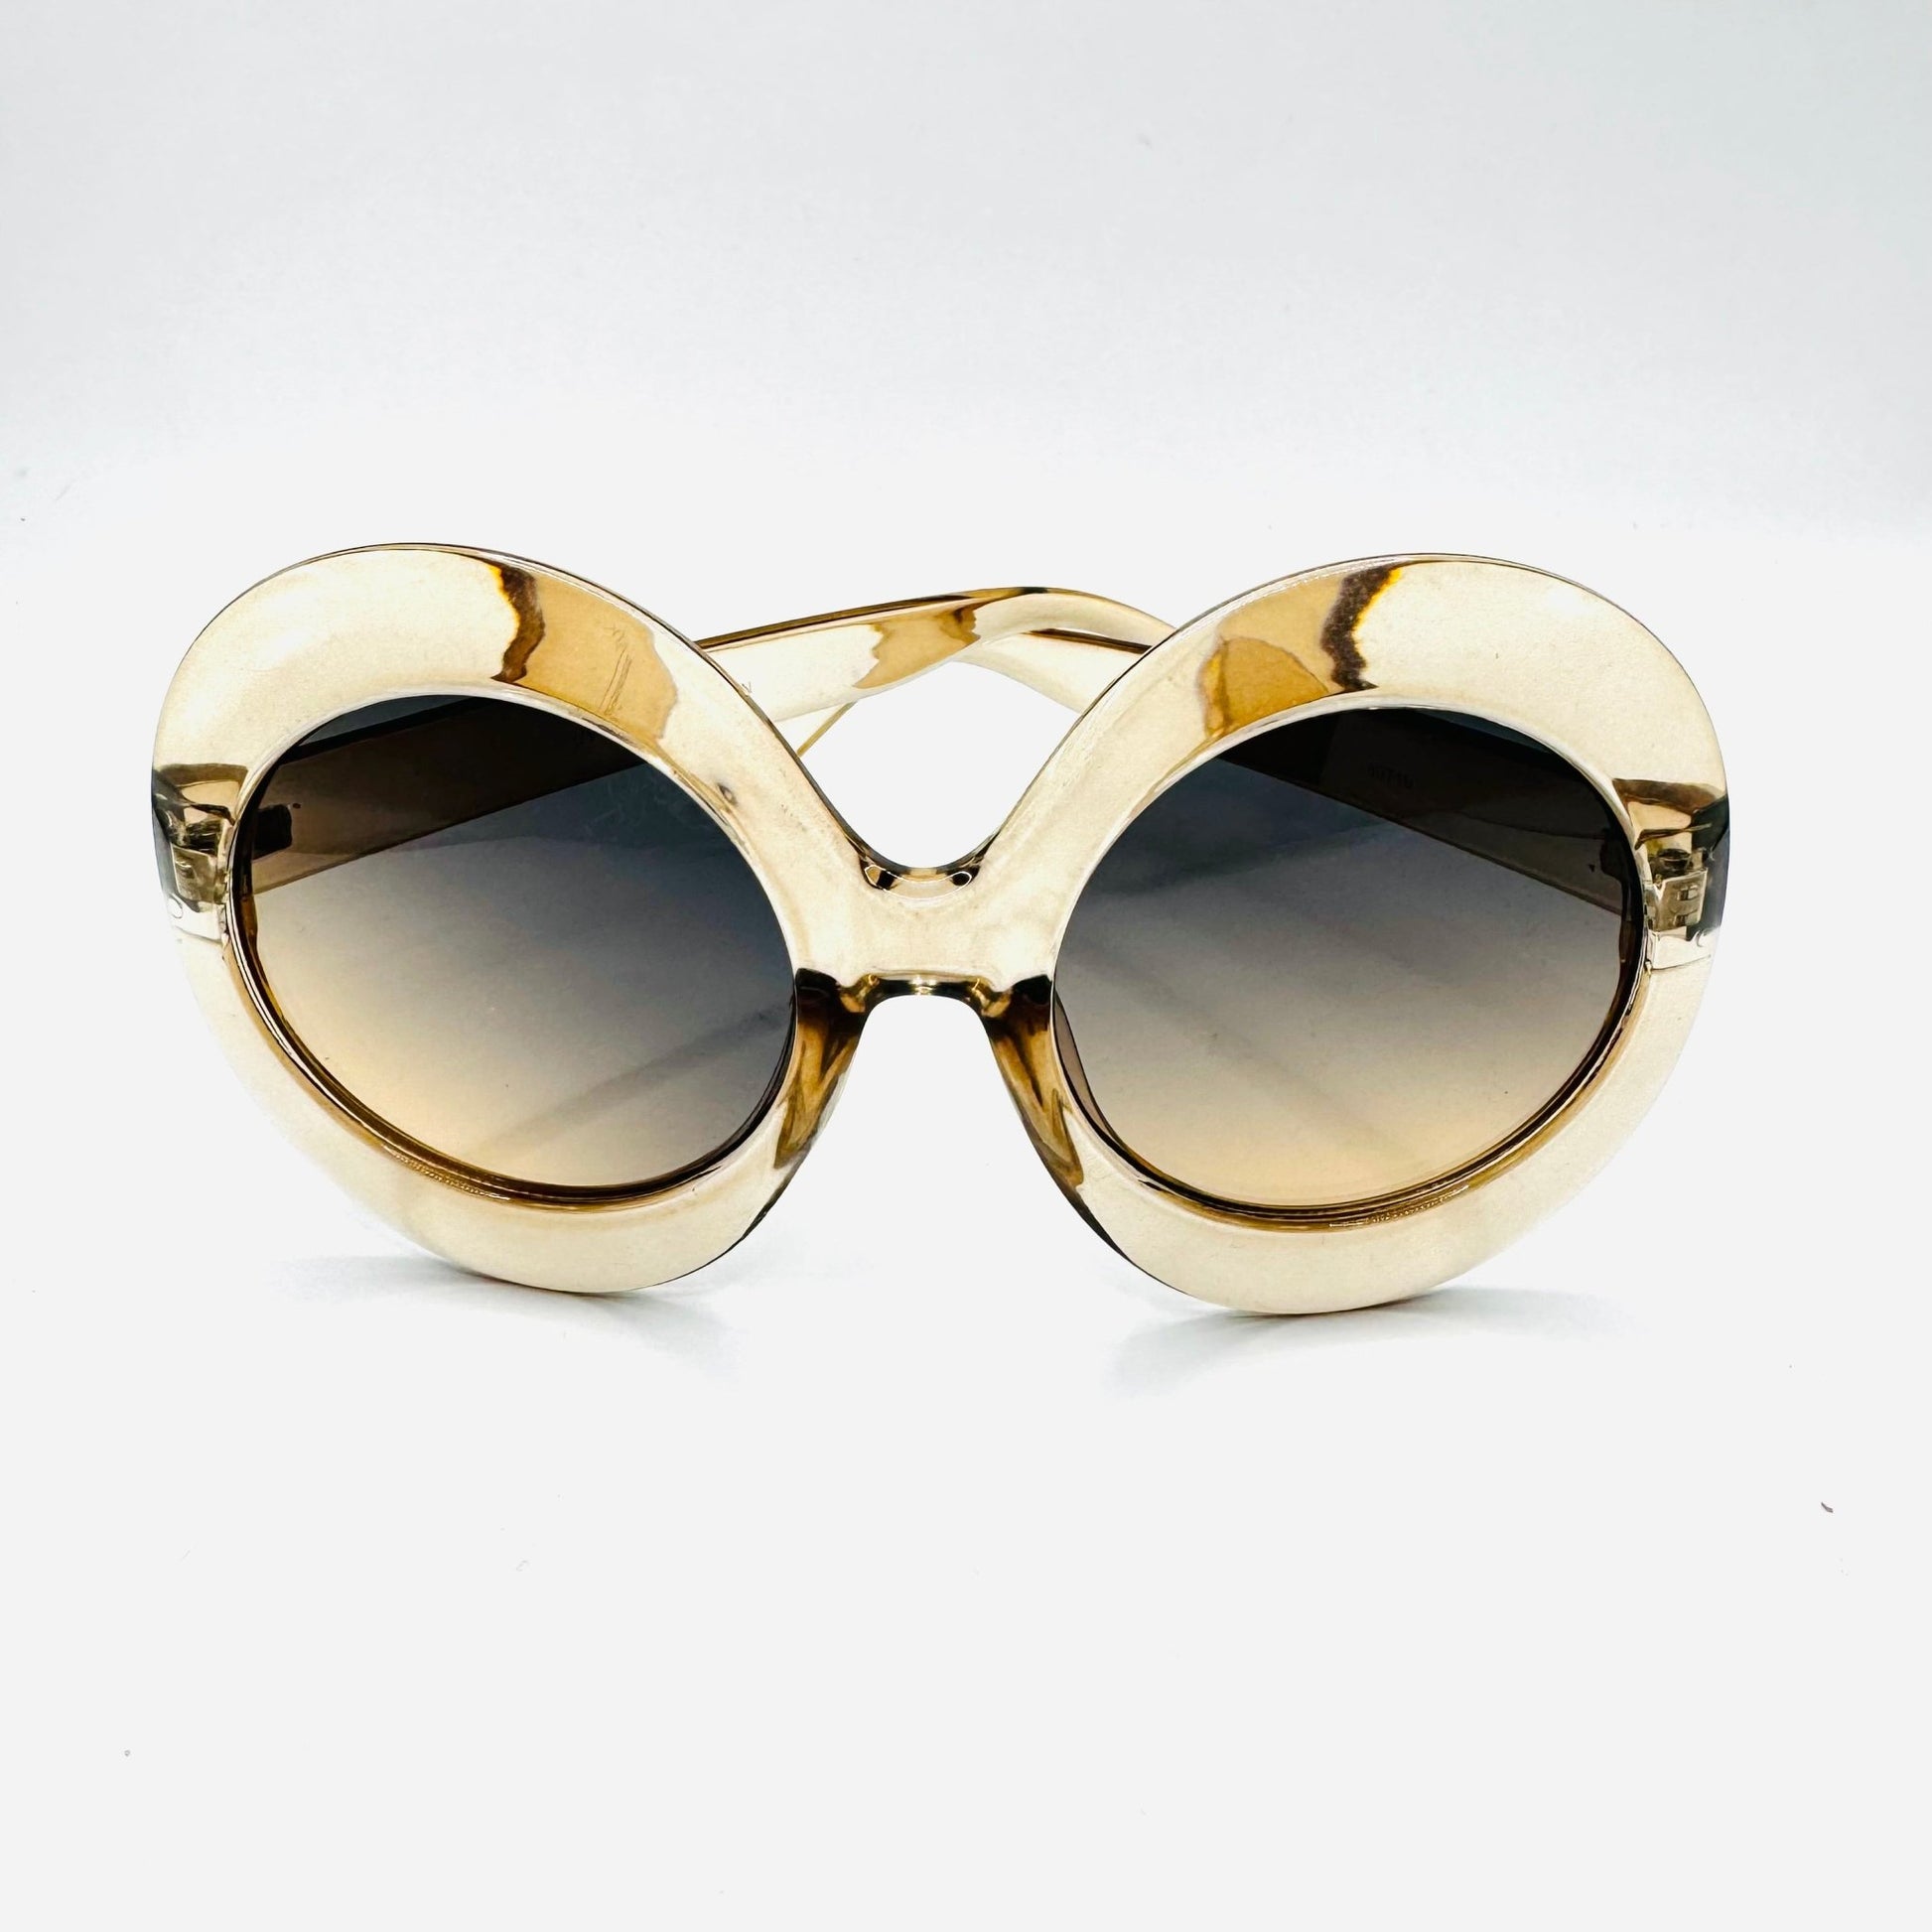 SHUN Glasses (Variety Of Sunglasses) - House of FaSHUN by Shun Melson